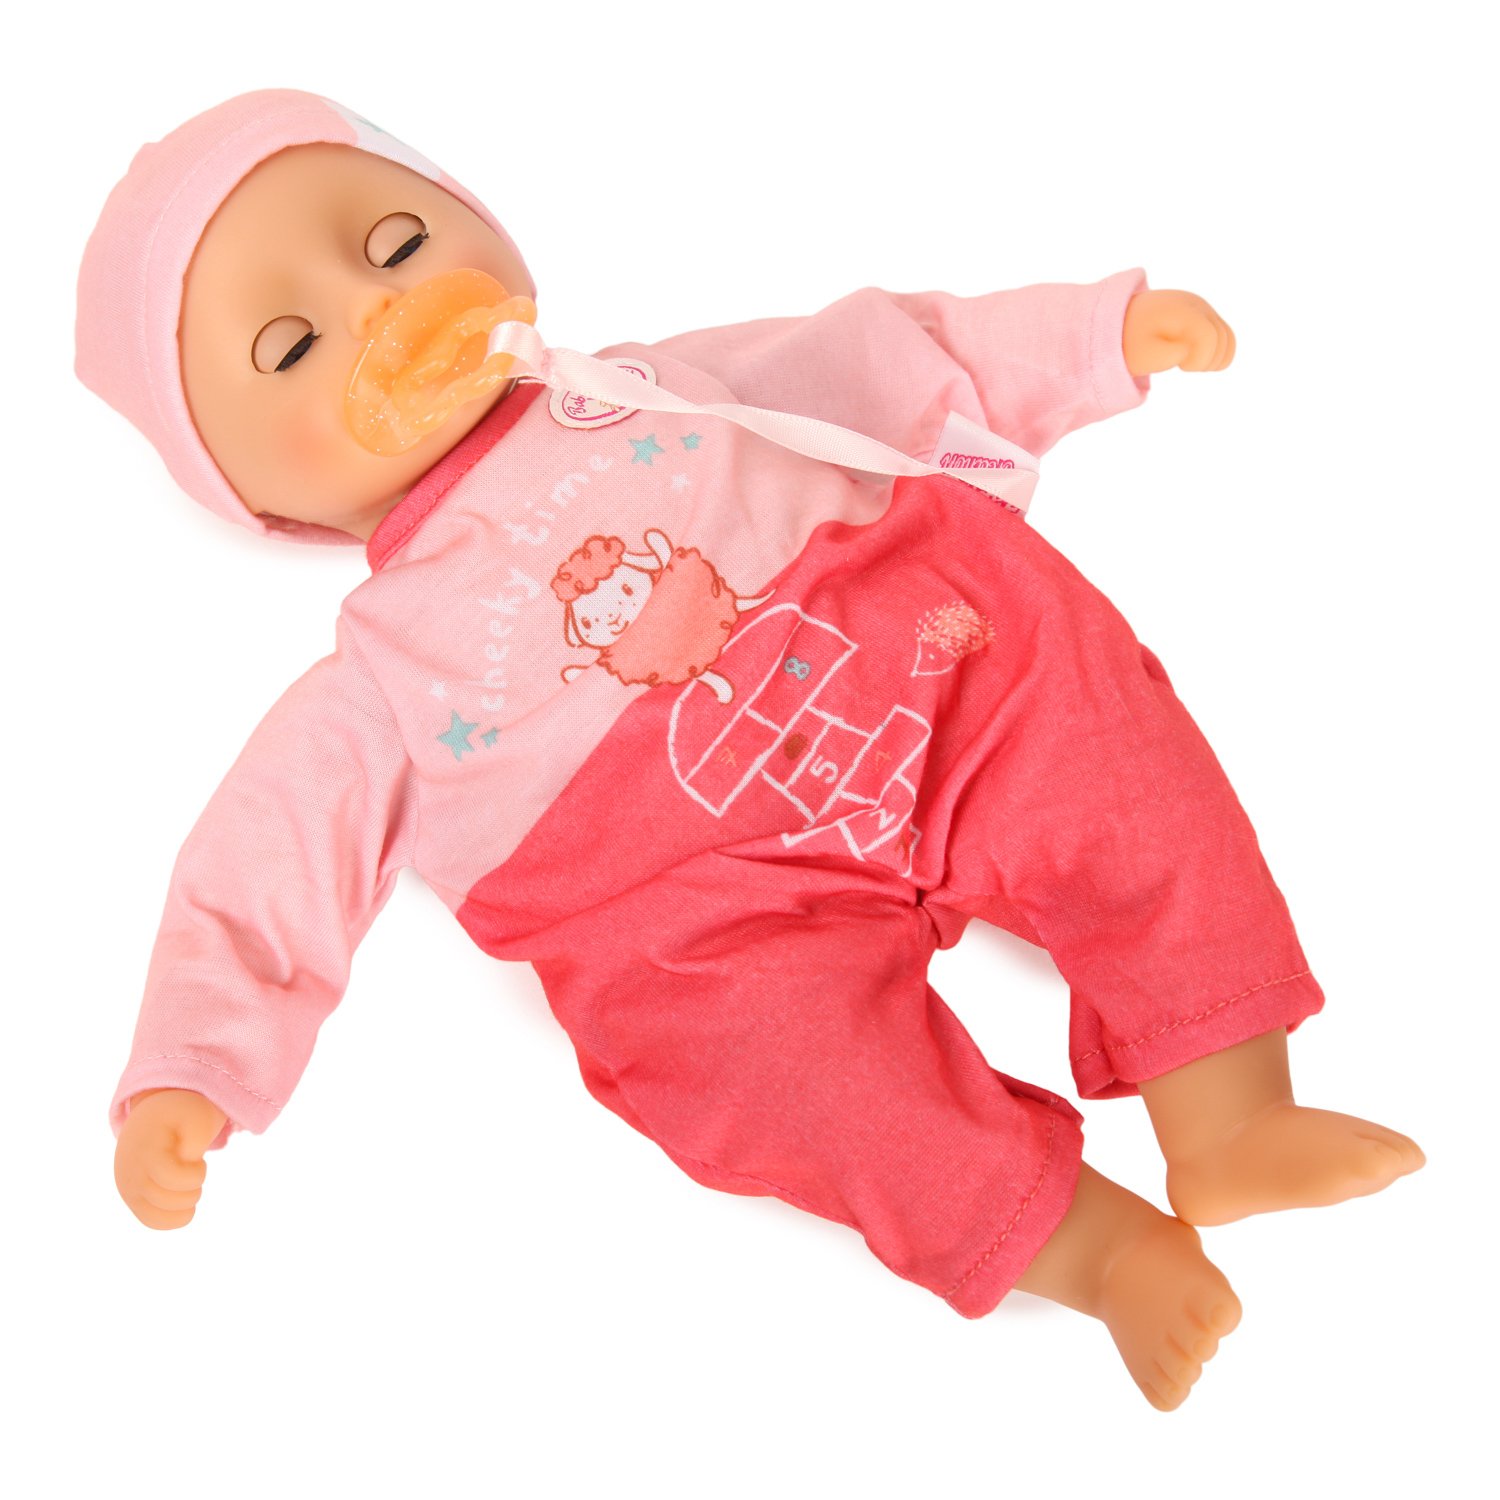 Пупс Zapf Creation Baby Annabell Моя первая кукла Анабелль 703304